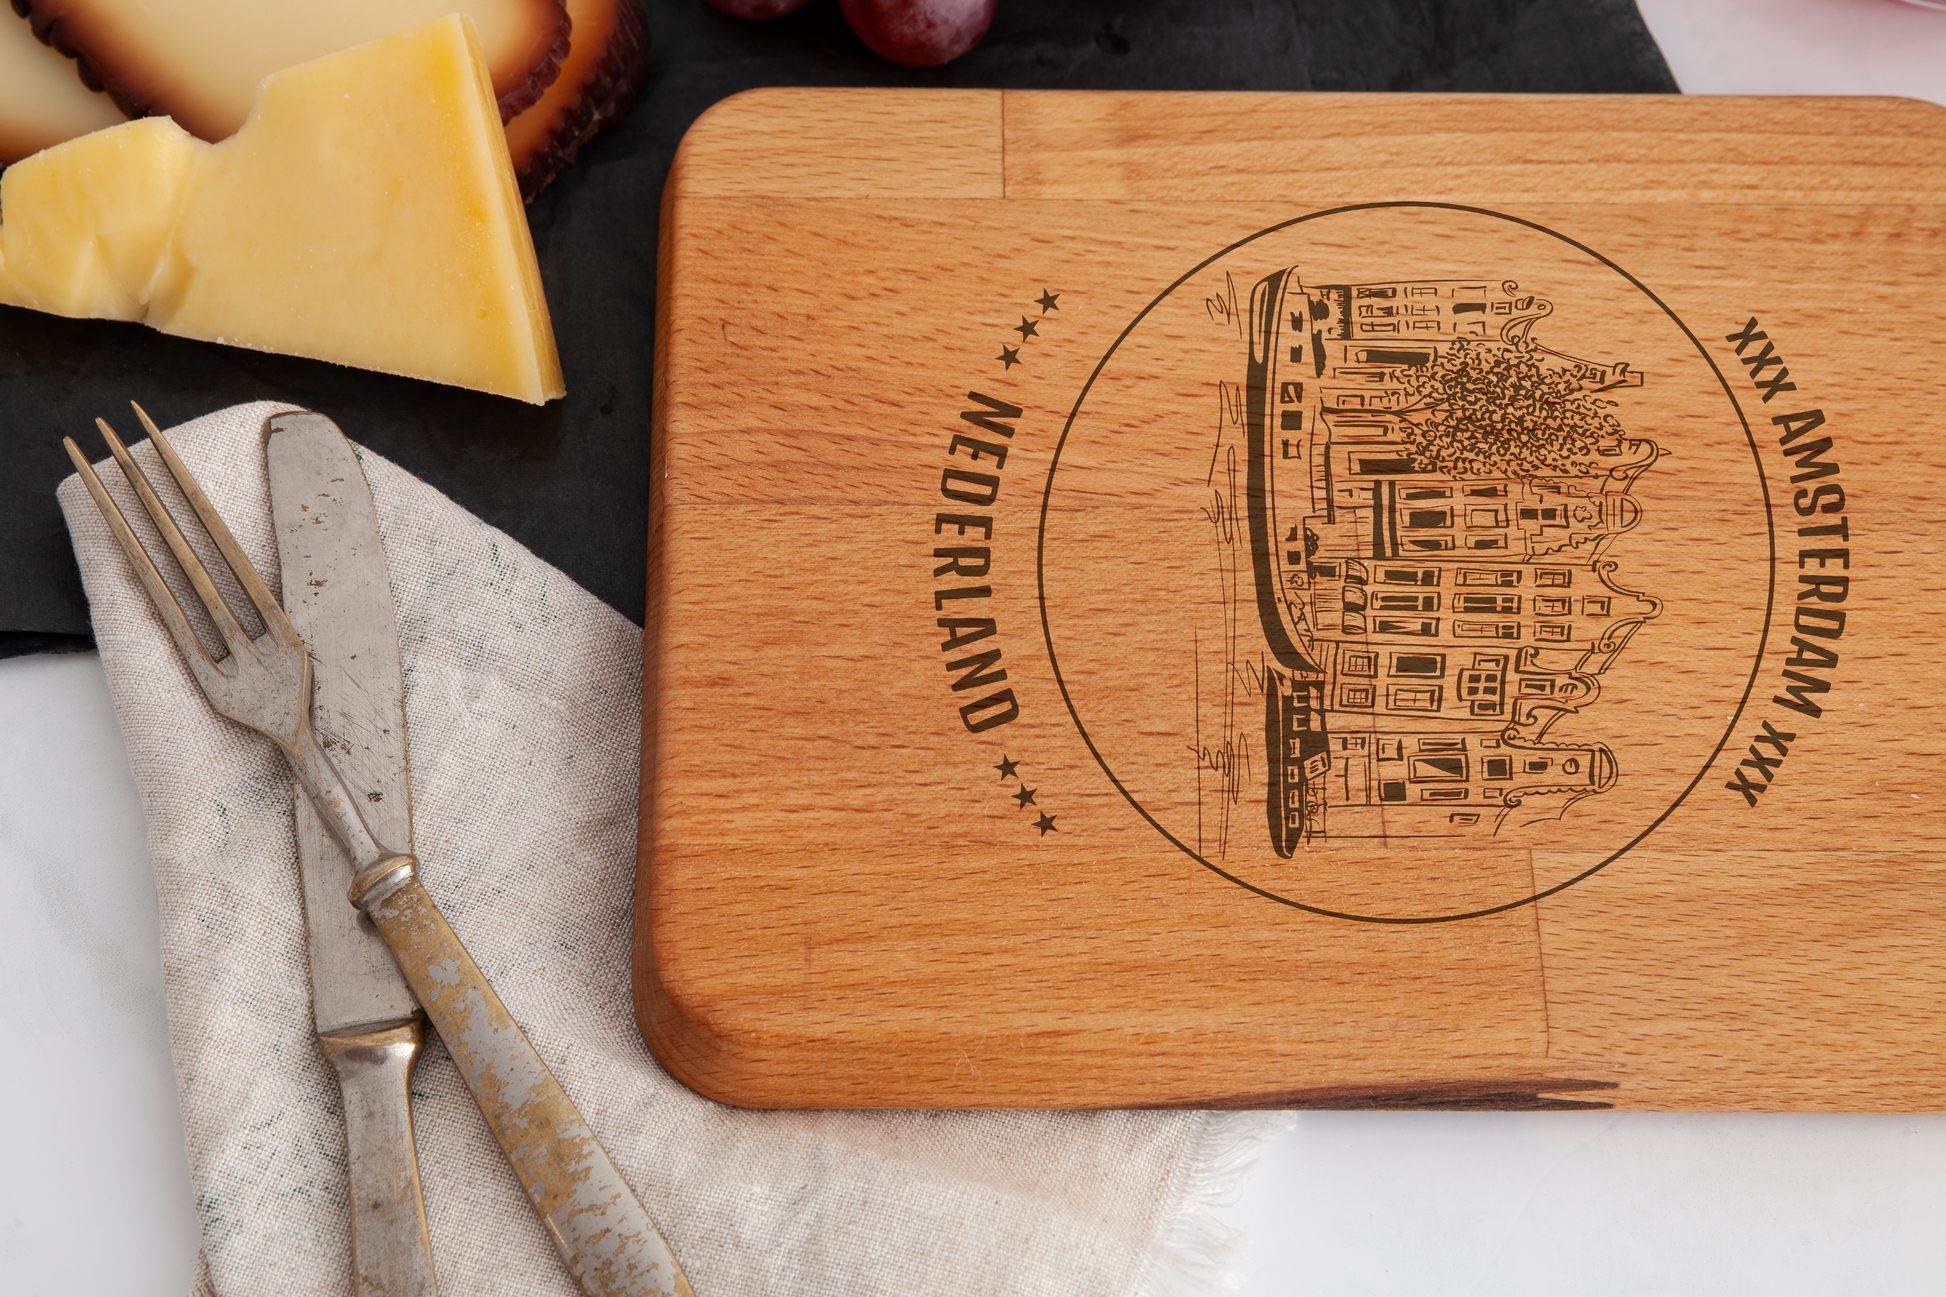 Amsterdam, Houses, cheese board, wood grain